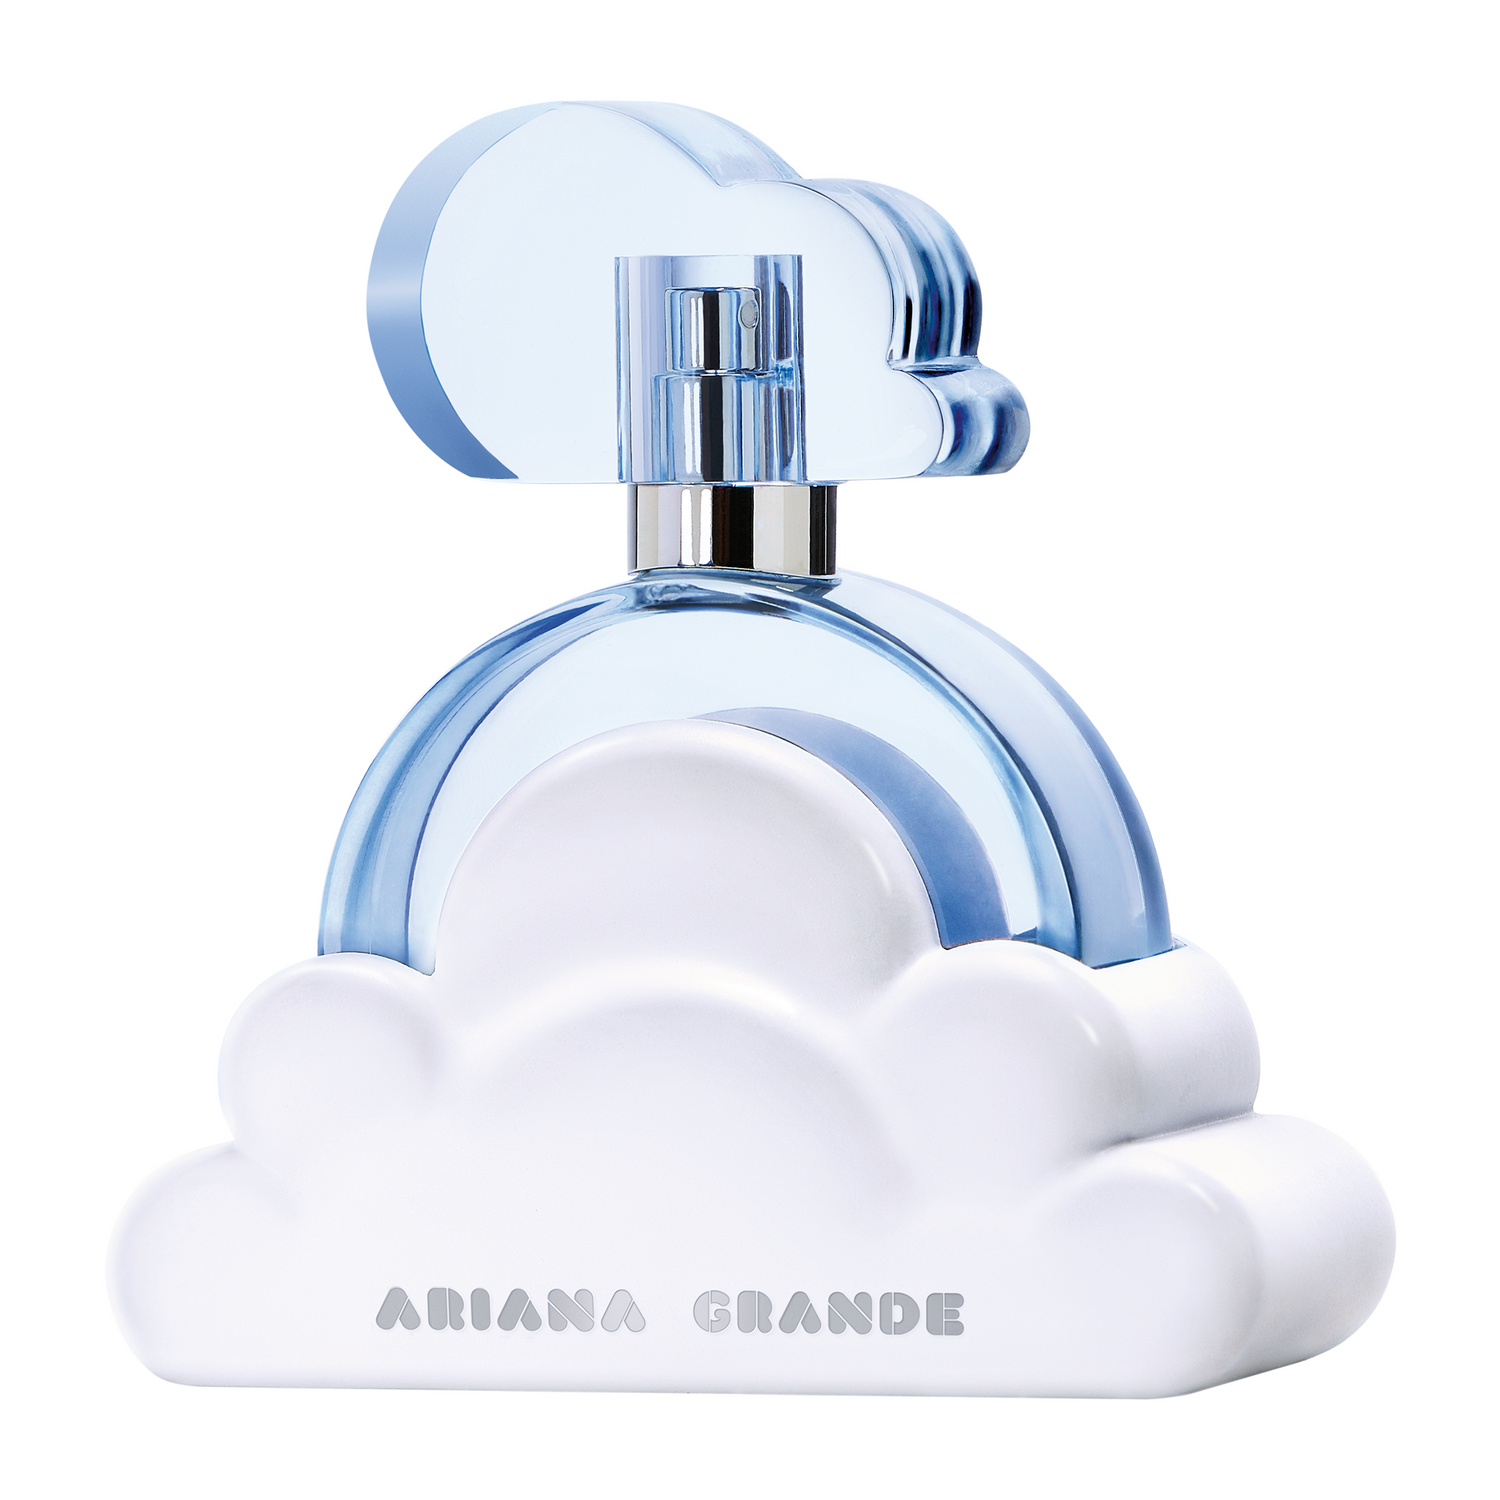 Cloud by Ariana Grande perfume bottle